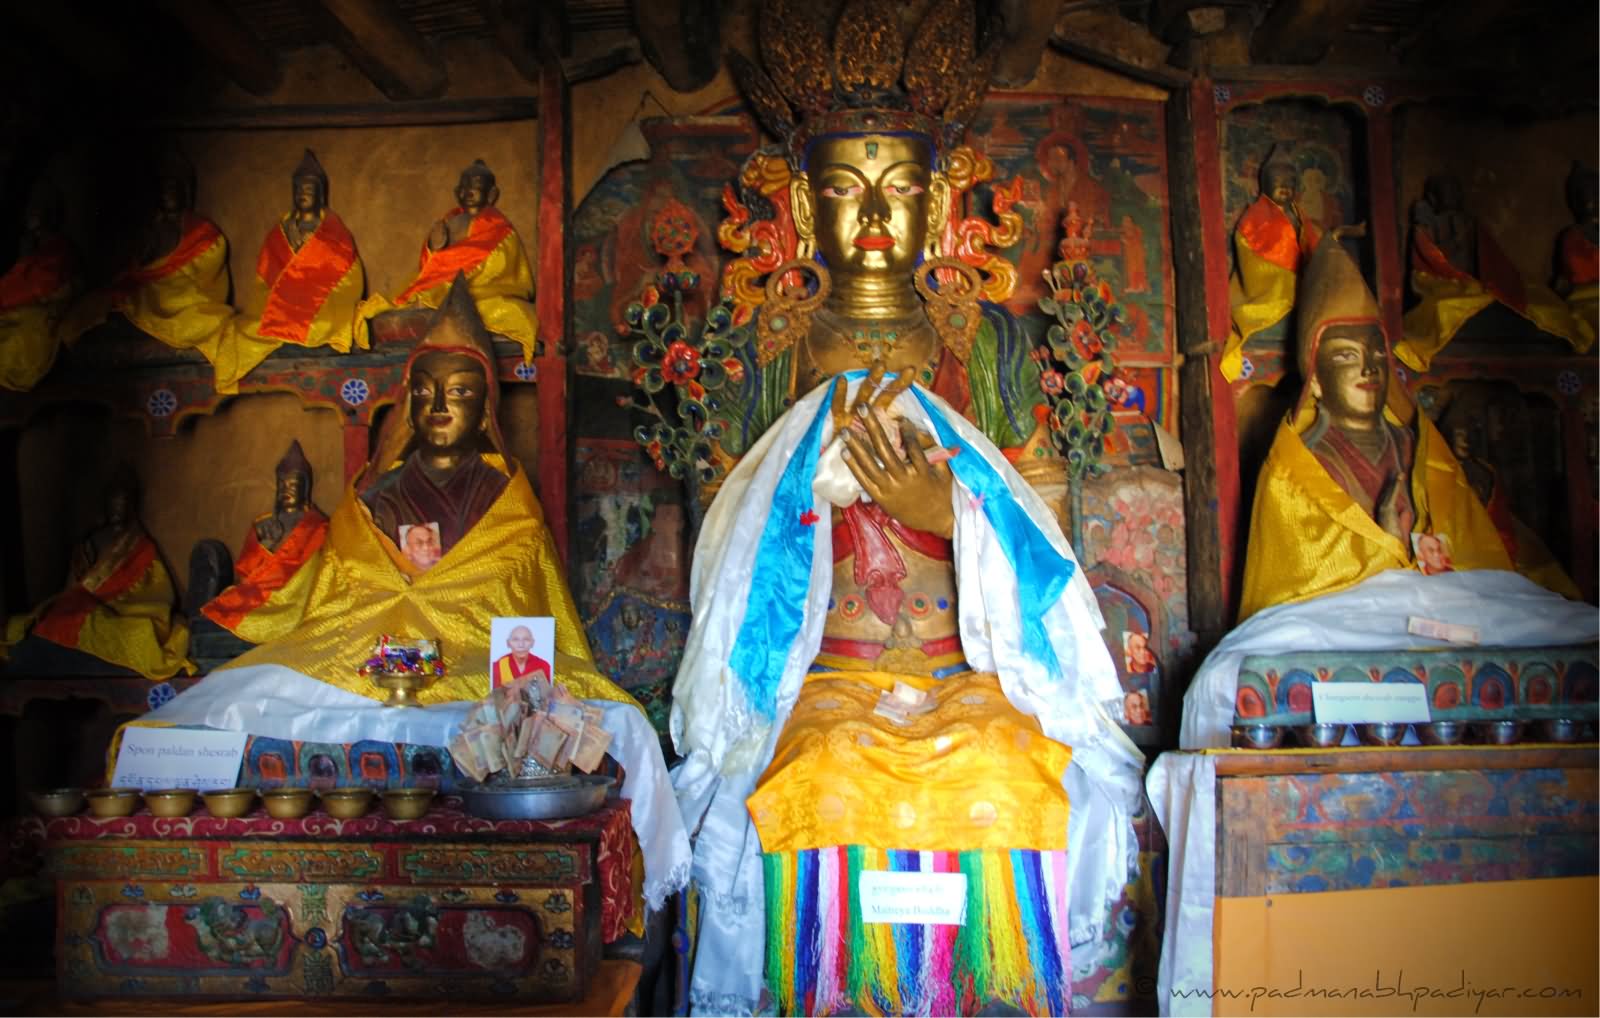 Adorable Sandalwood Statues Inside The Potala Palace